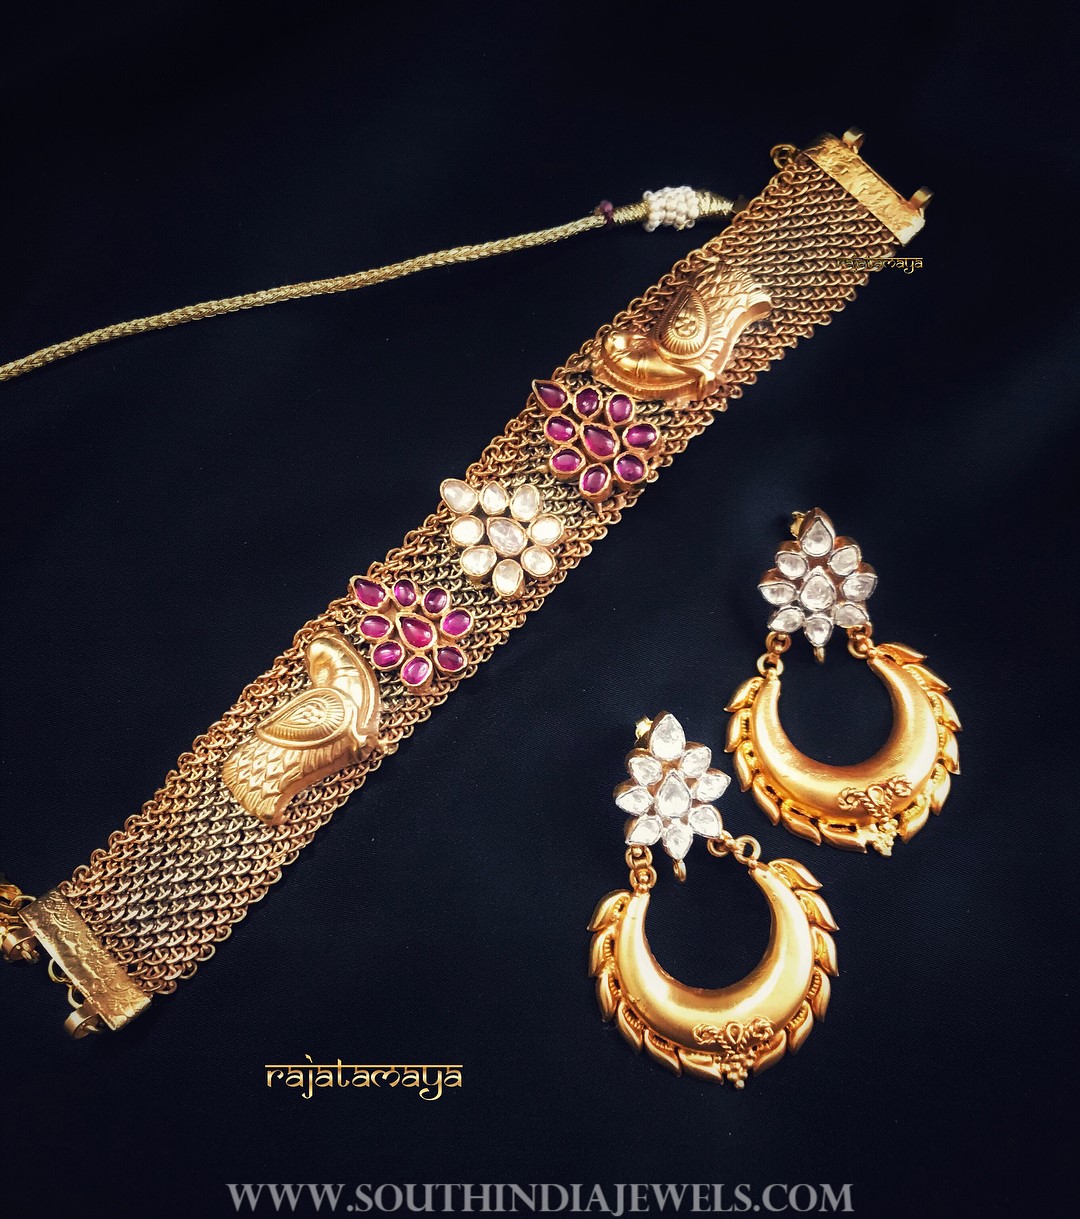 Antique Choker & Earrings From Rajatamaya